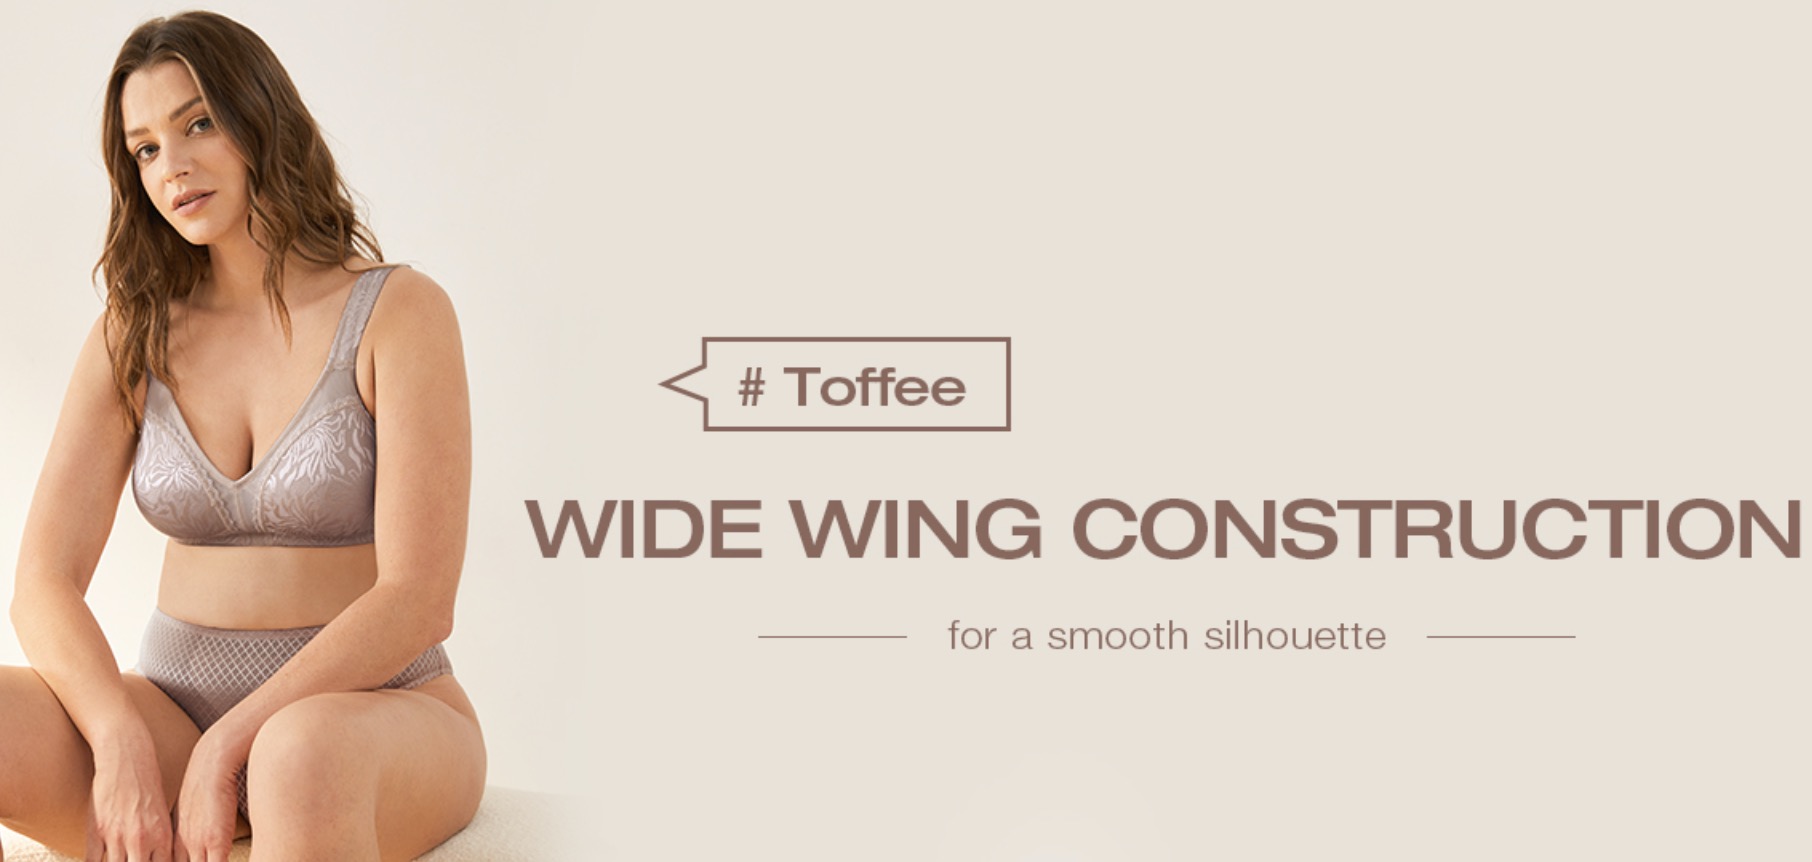 Women's Plus Size Bra, Wirefree Comfort Strap Toffee, 38 DDD